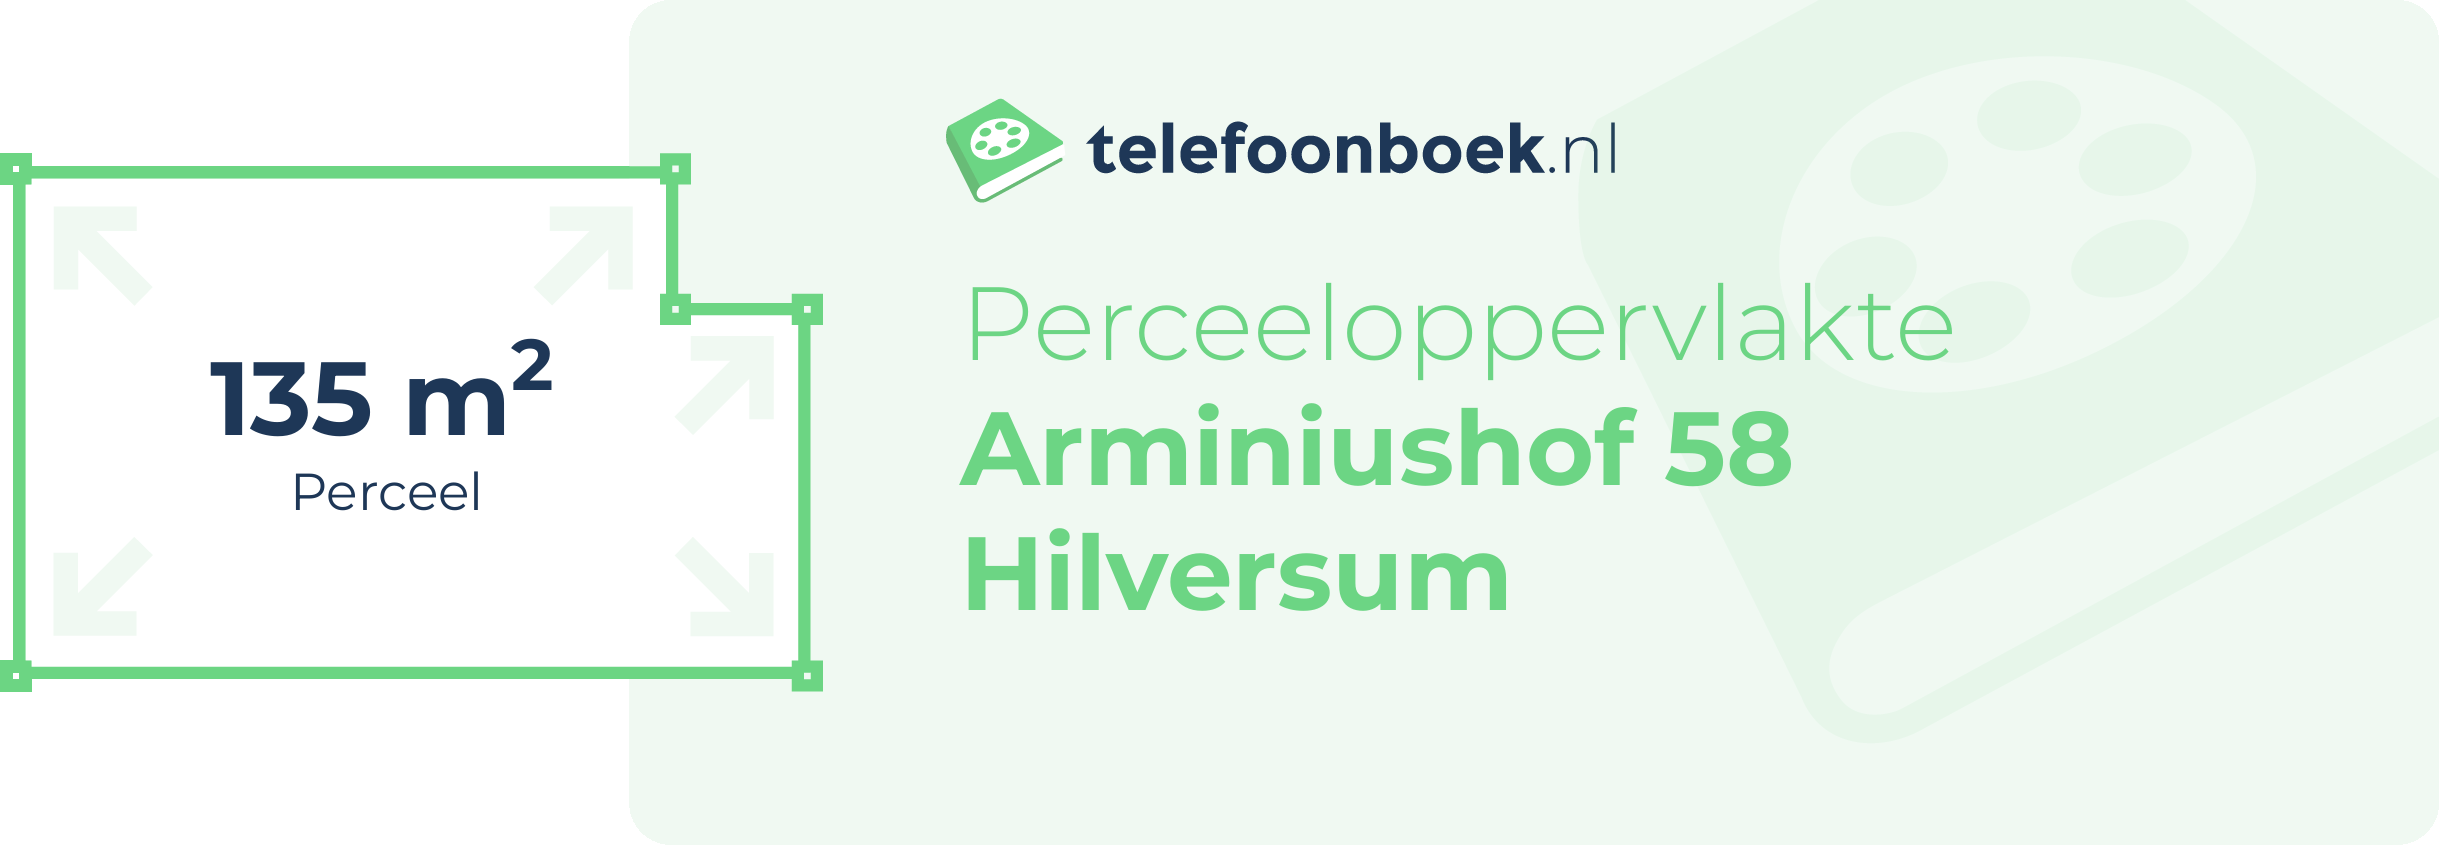 Perceeloppervlakte Arminiushof 58 Hilversum